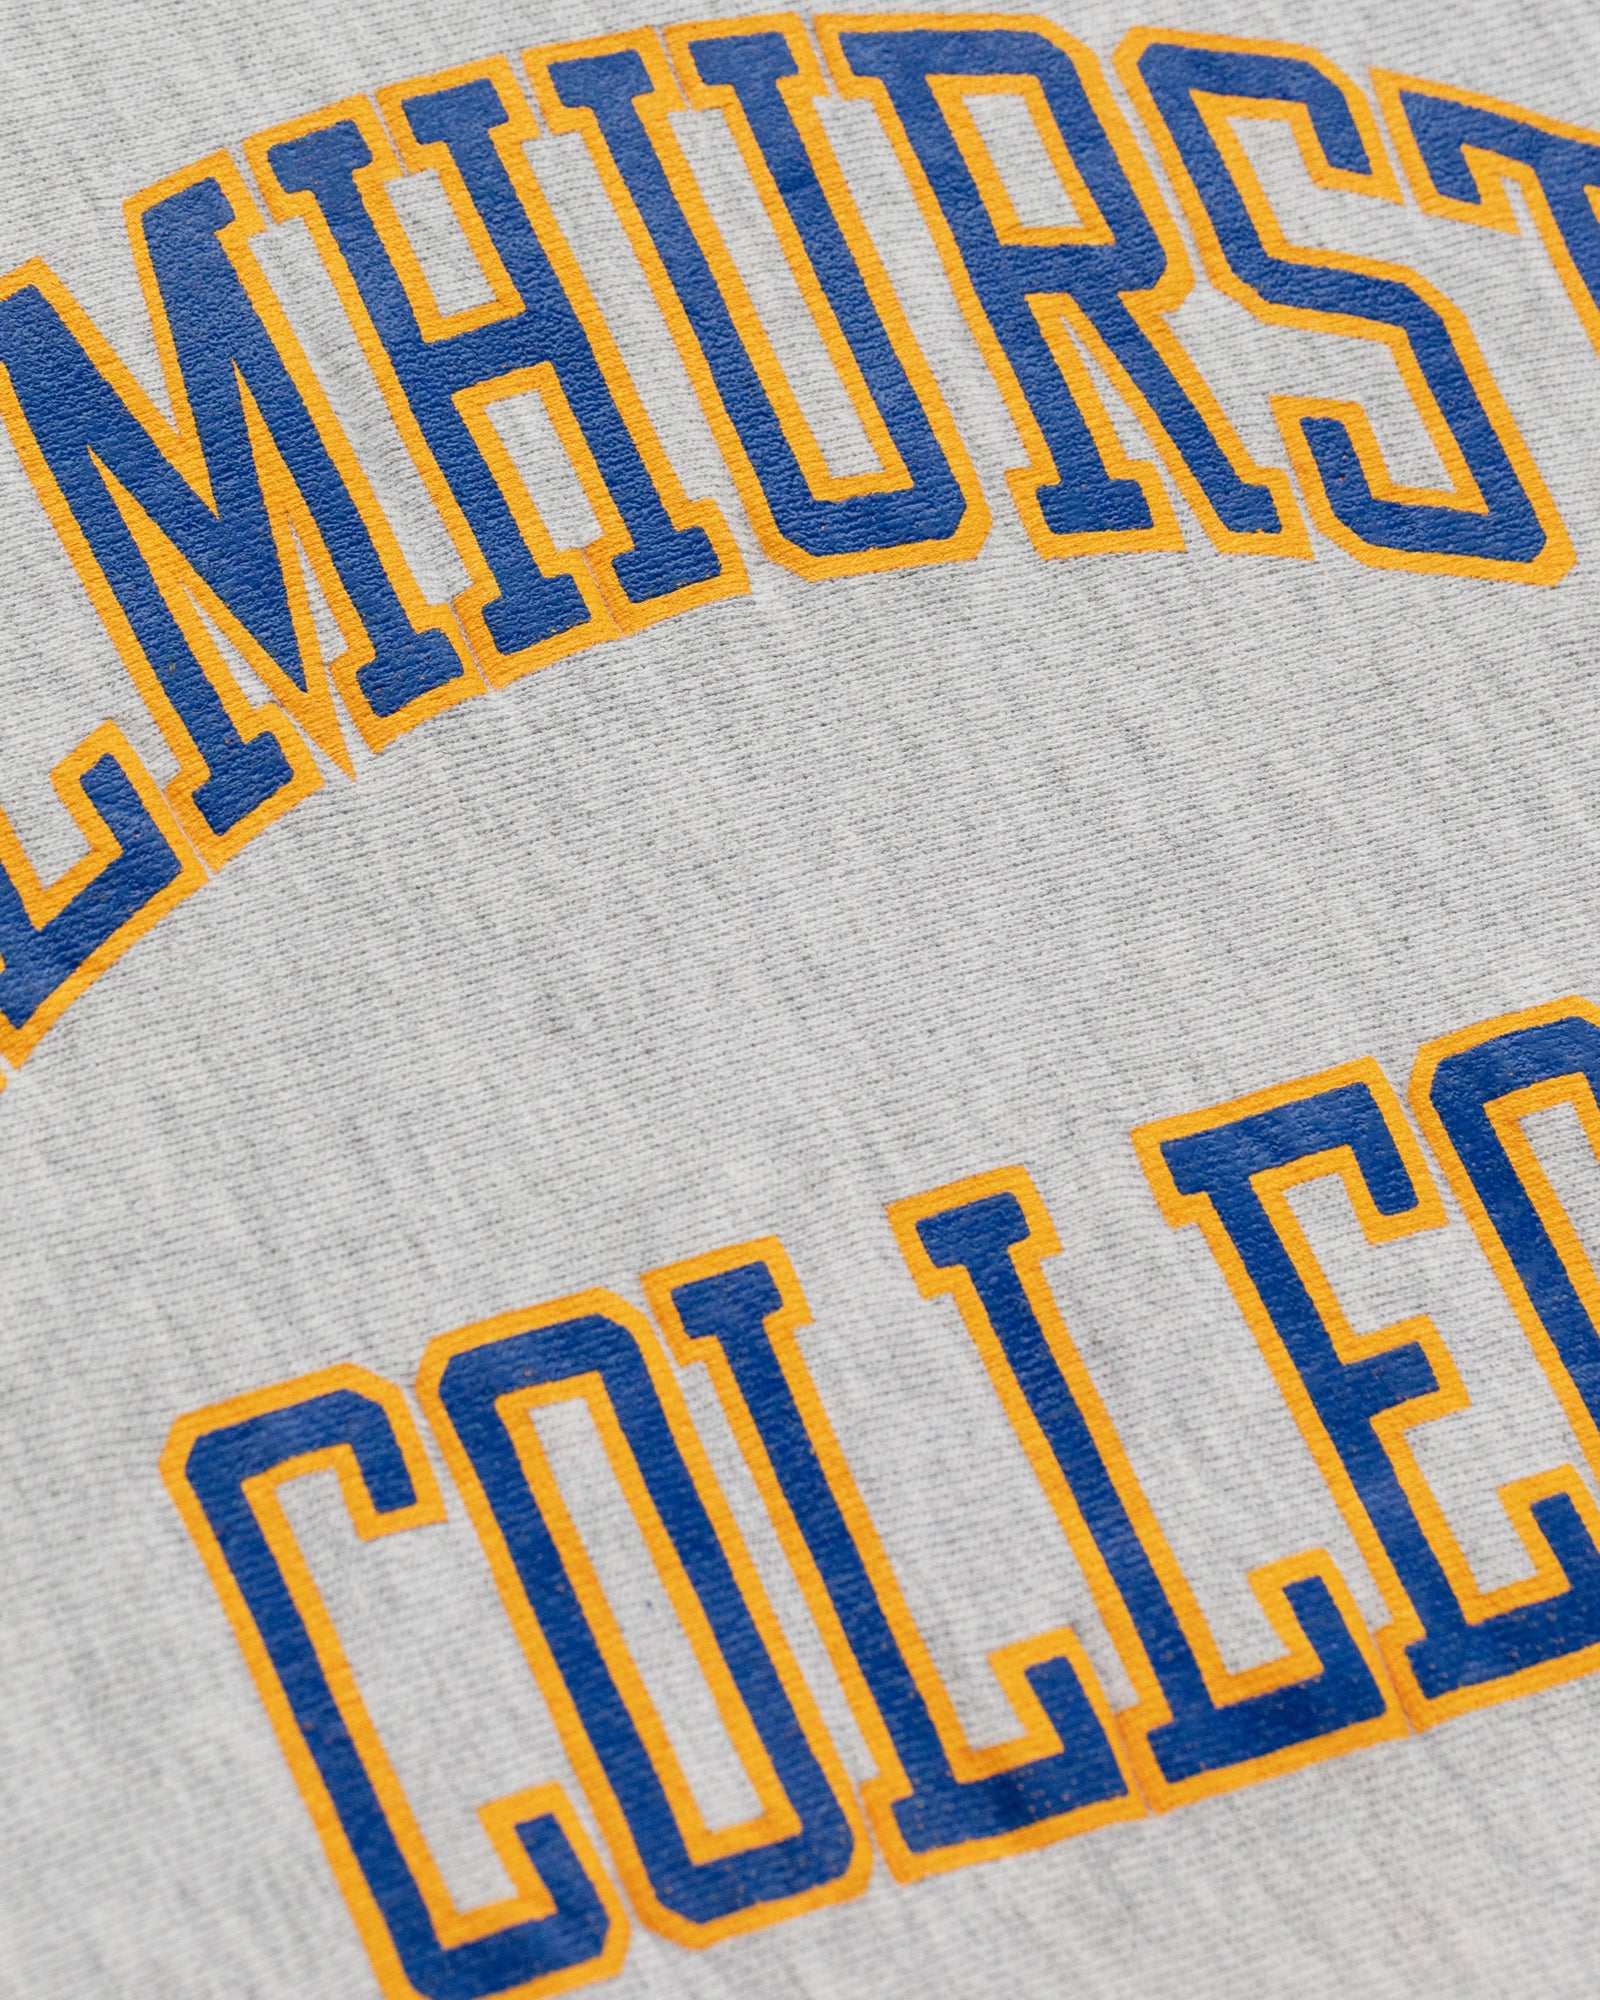 Vintage Elmhurst College Reverse Weave Sweatshirt